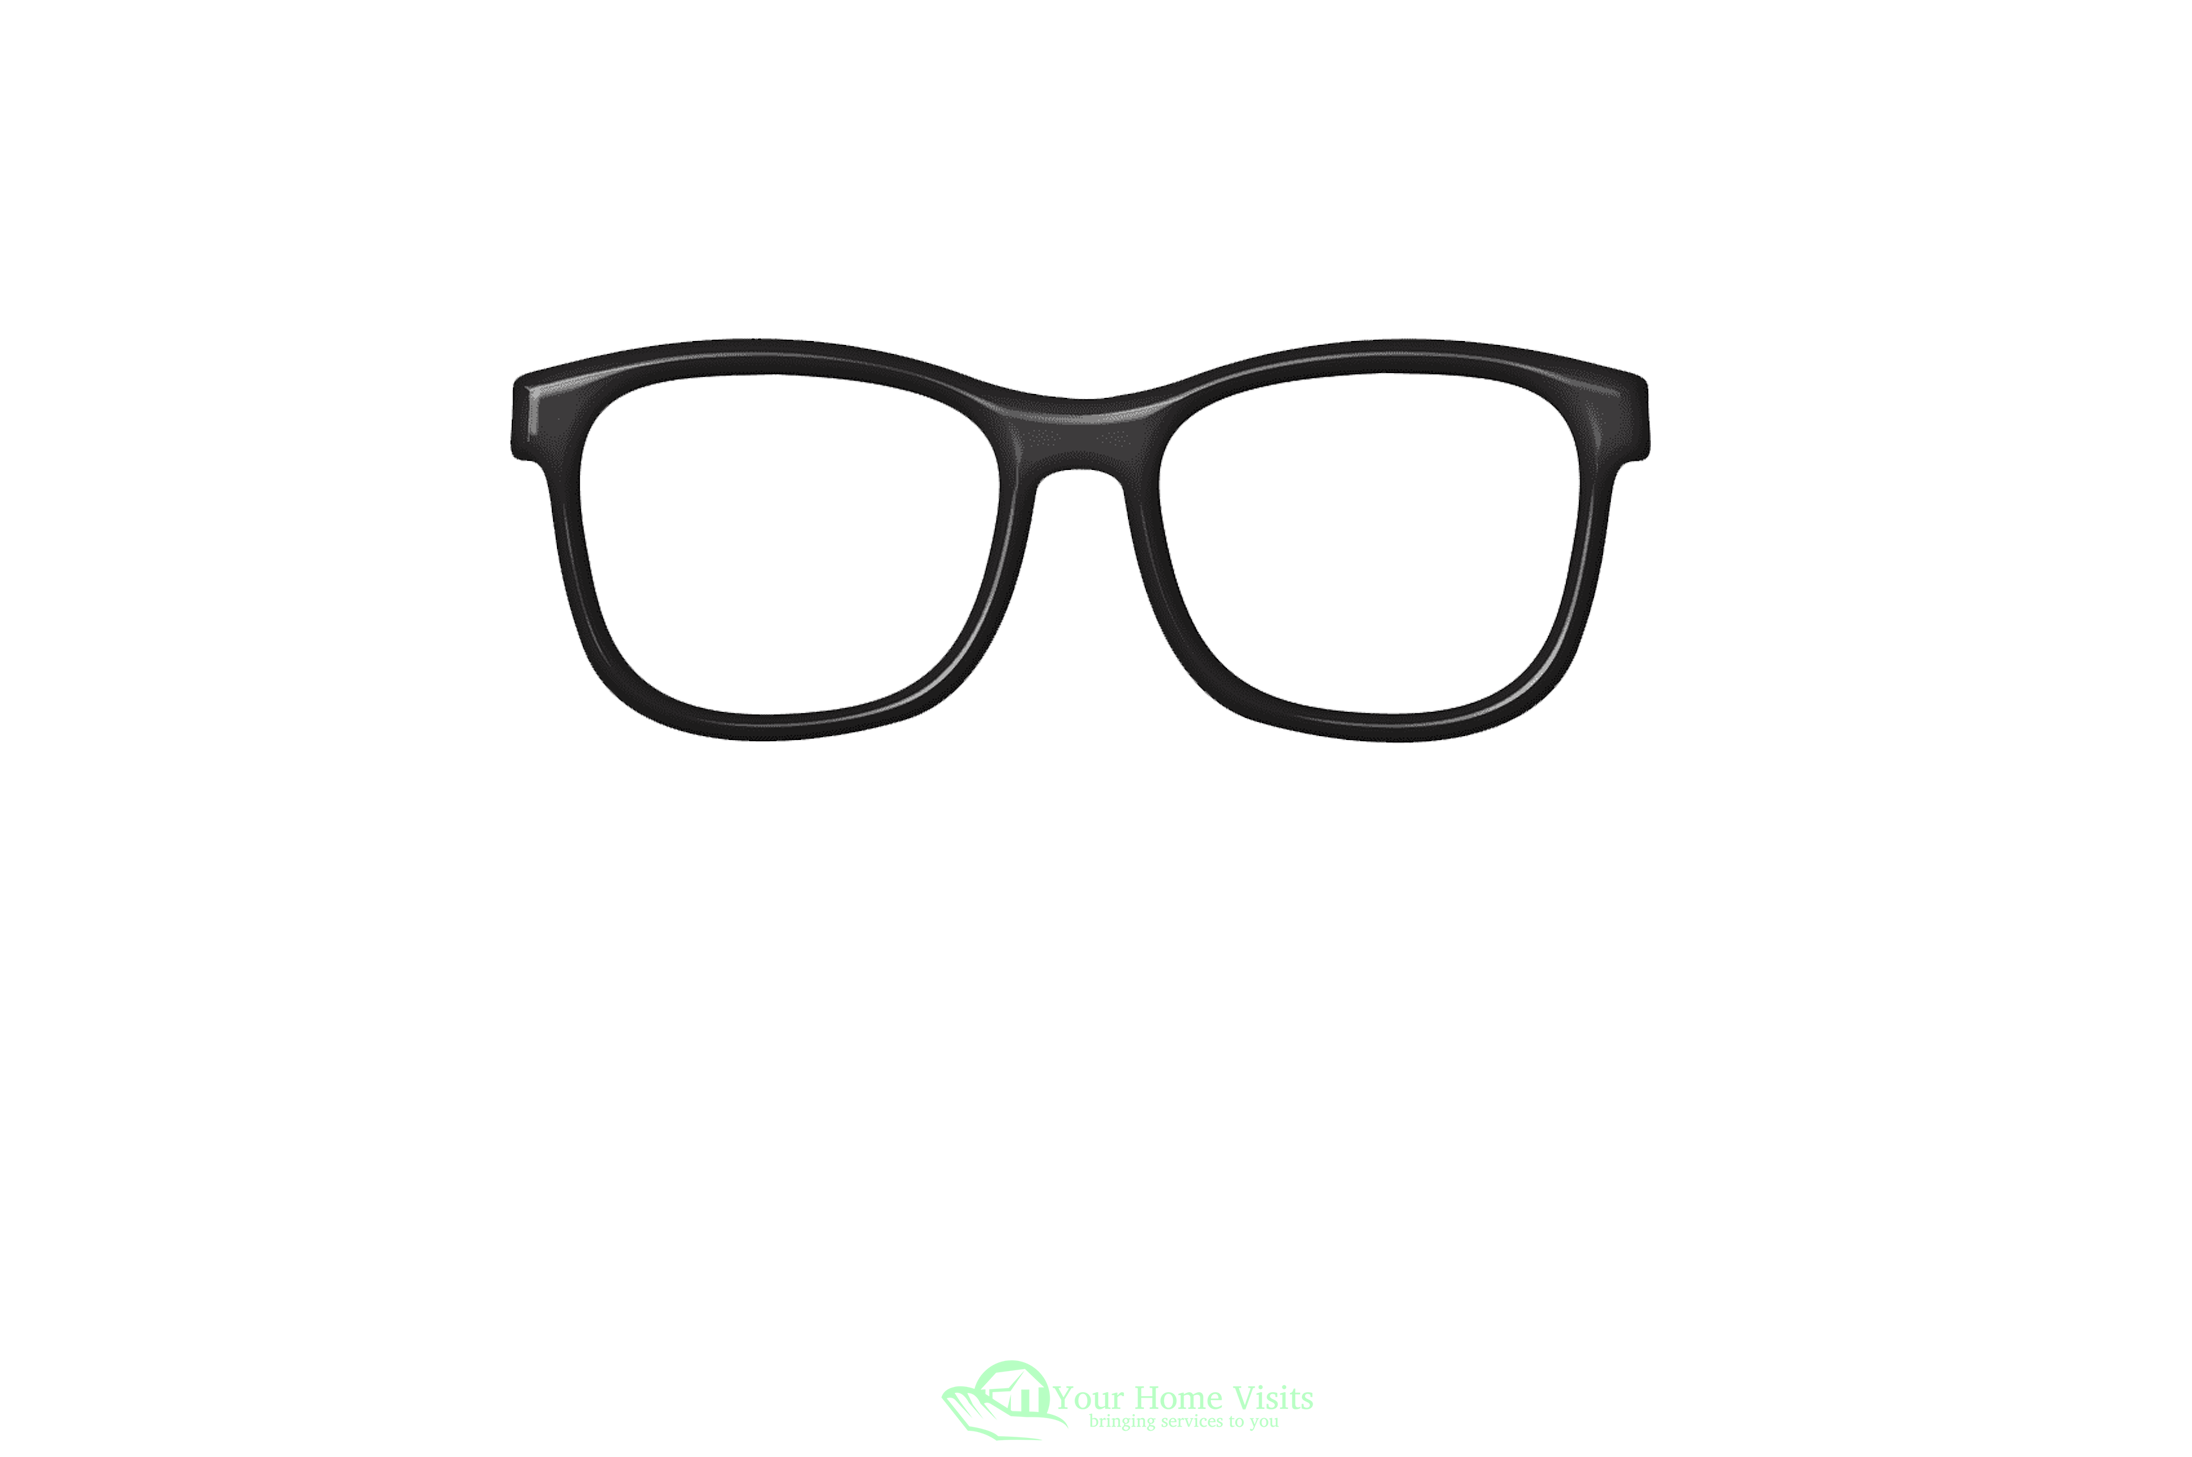 Free eye test